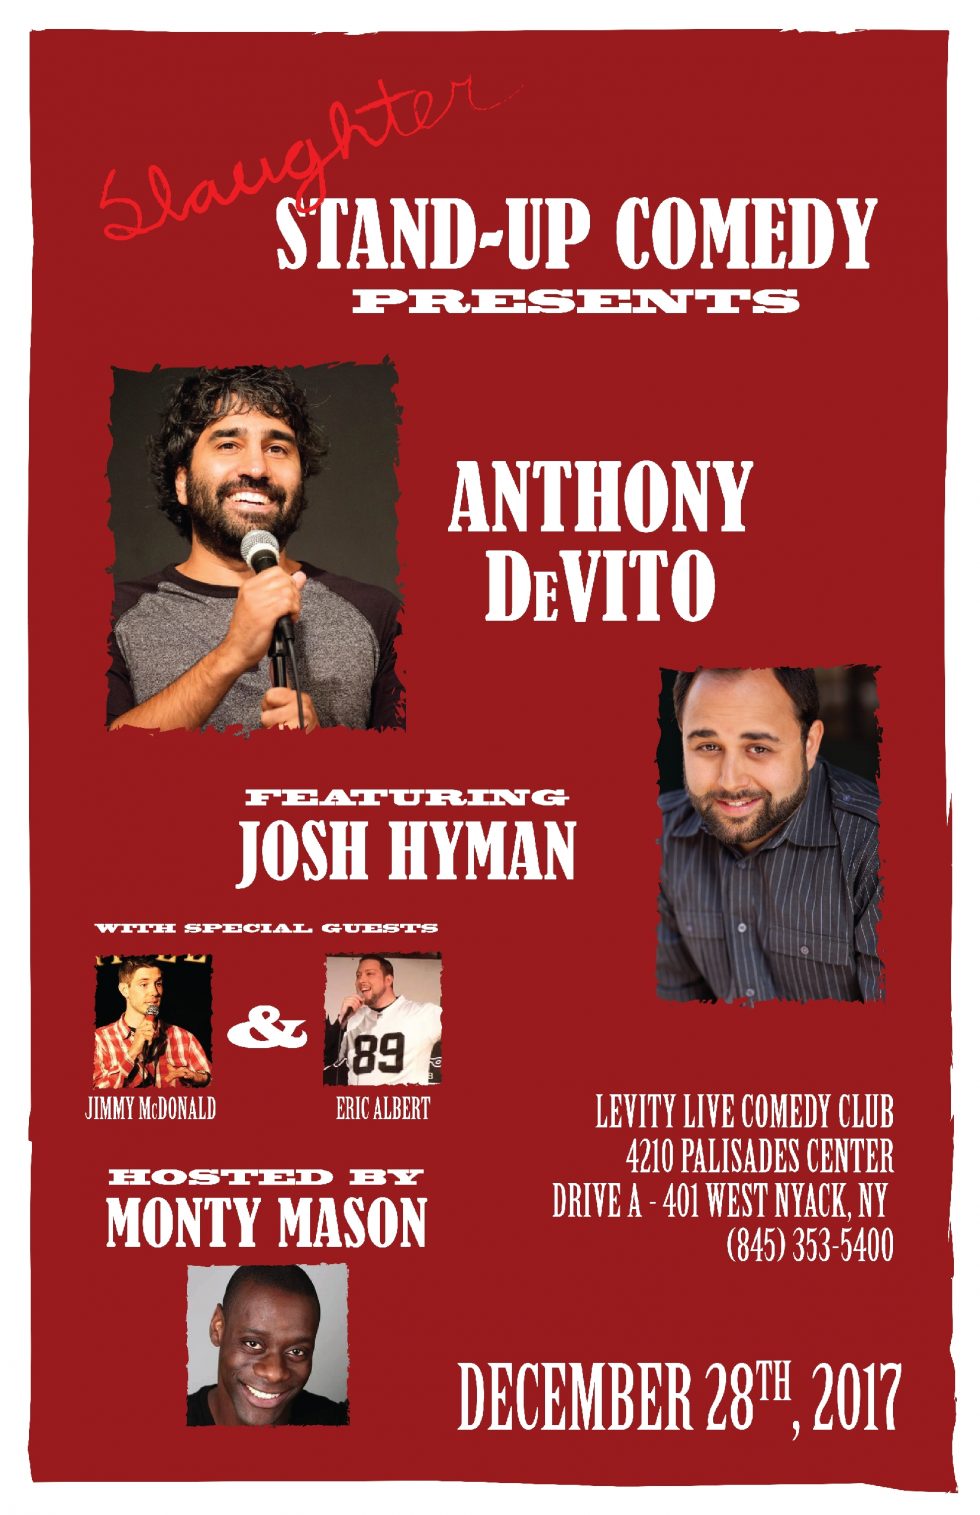 Levity Live Comedy Club Palisades Center